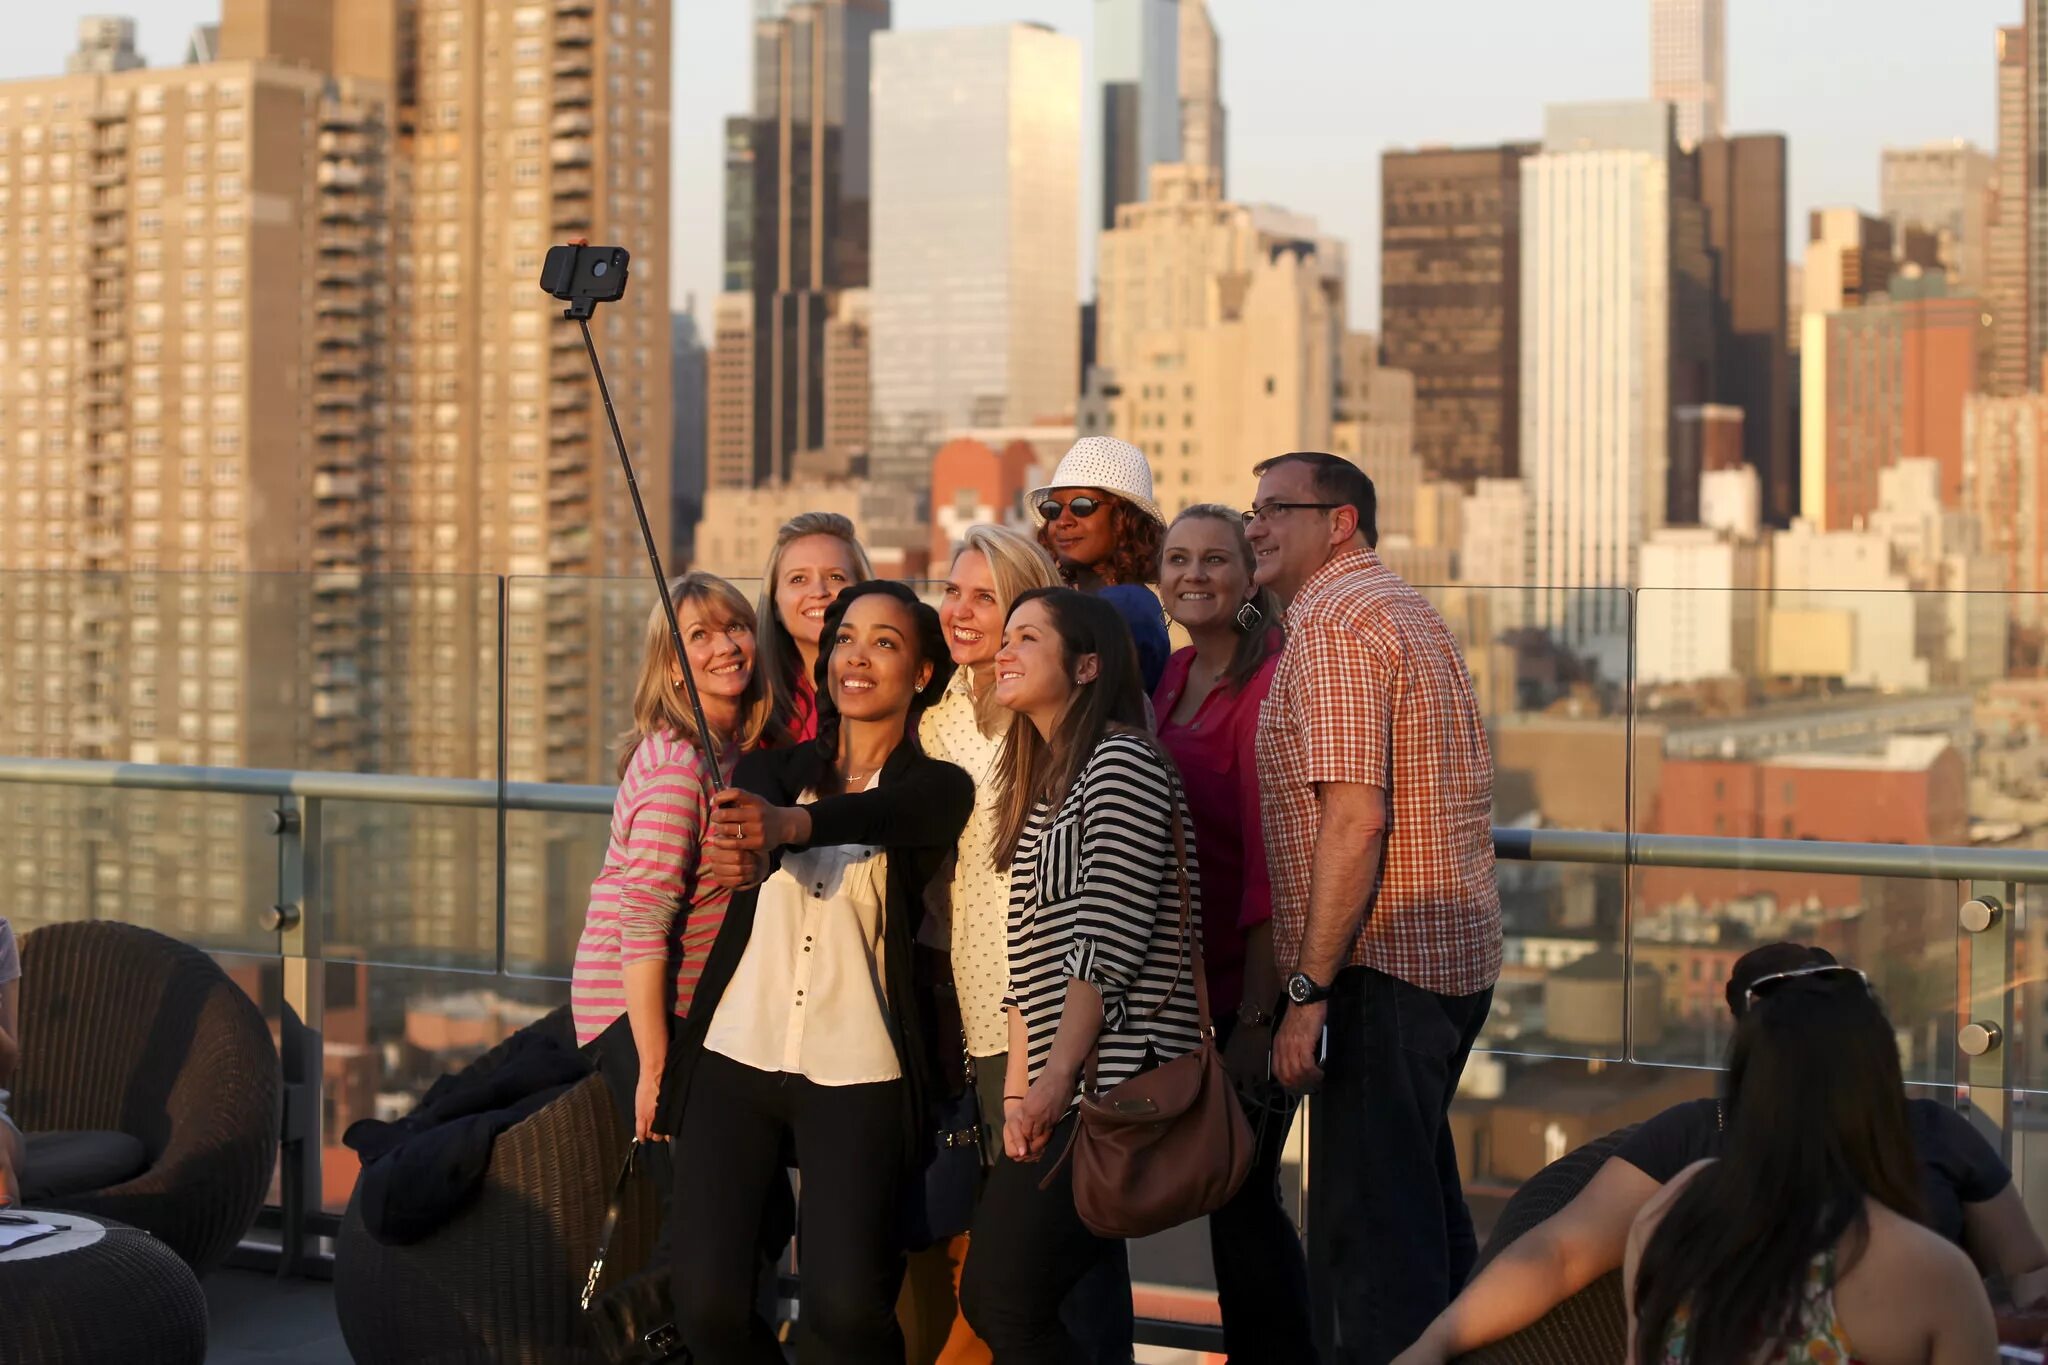 Home selfie. Панорамное селфи. Селфи палка New York. Груфи селфи вид. Компания делает селфи.